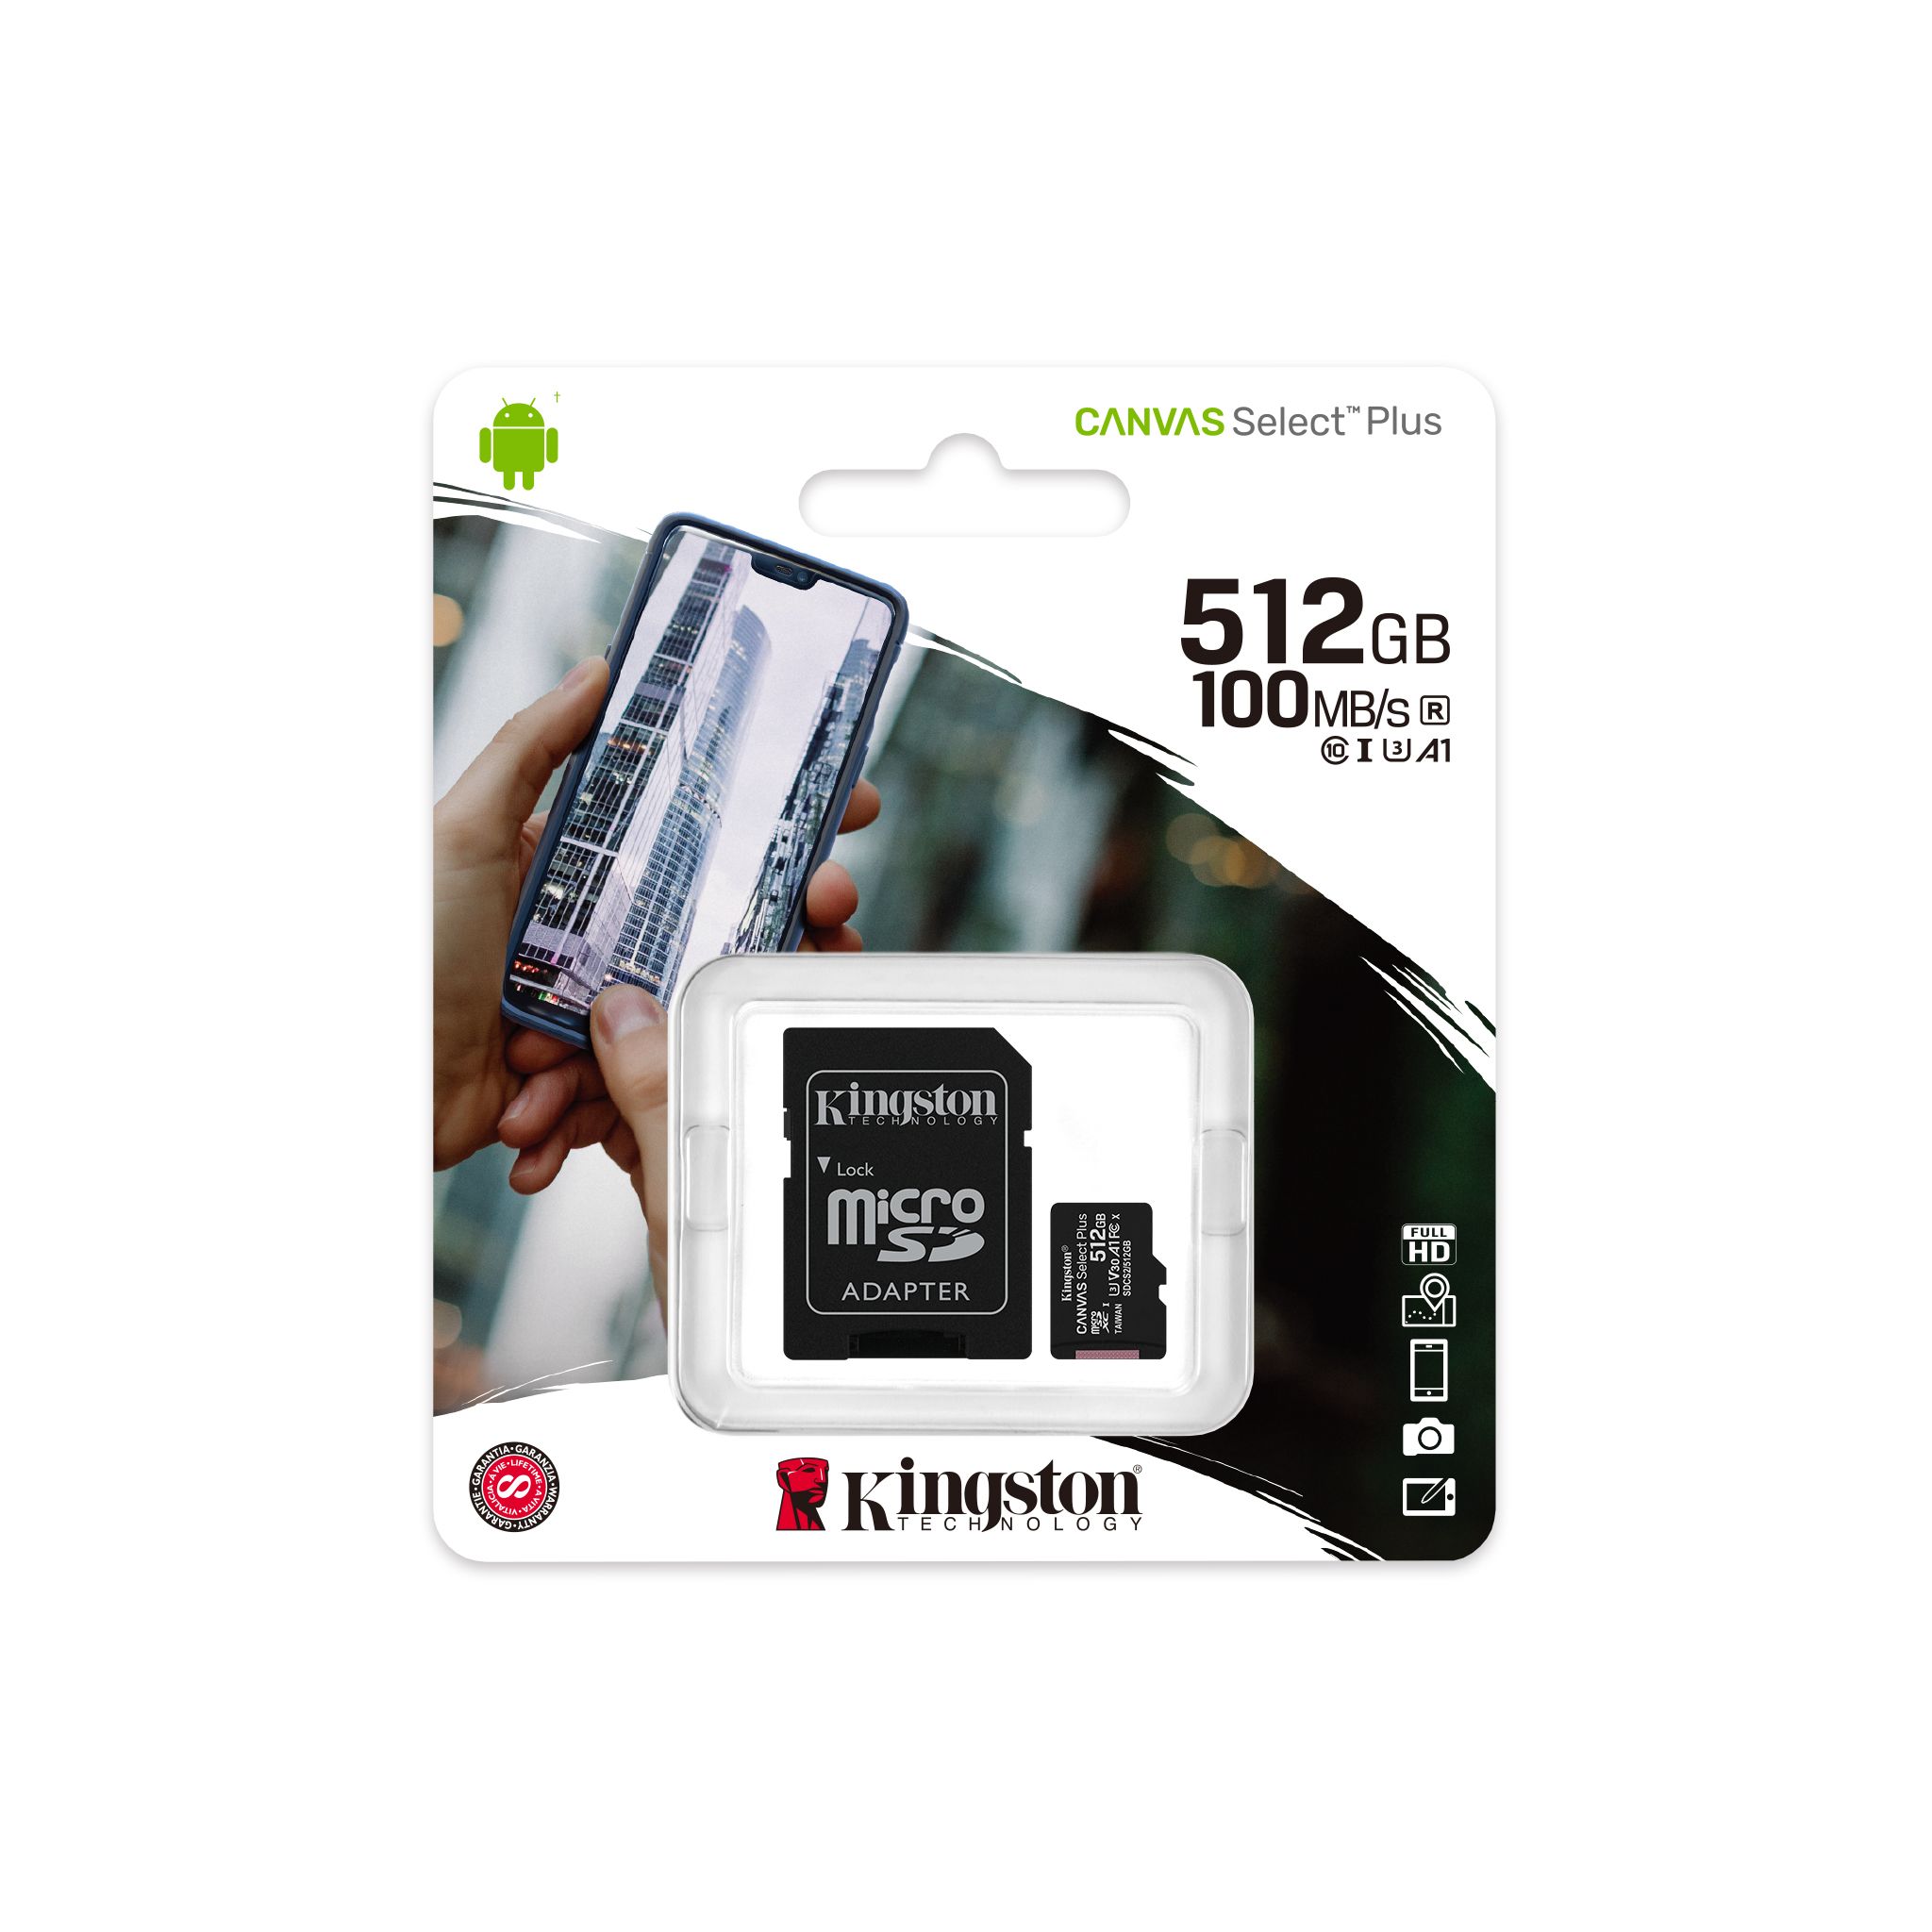 100MBs Works with Kingston Kingston 512GB Motorola Moto Z Droid Edition 32GB MicroSDXC Canvas Select Plus Card Verified by SanFlash. 